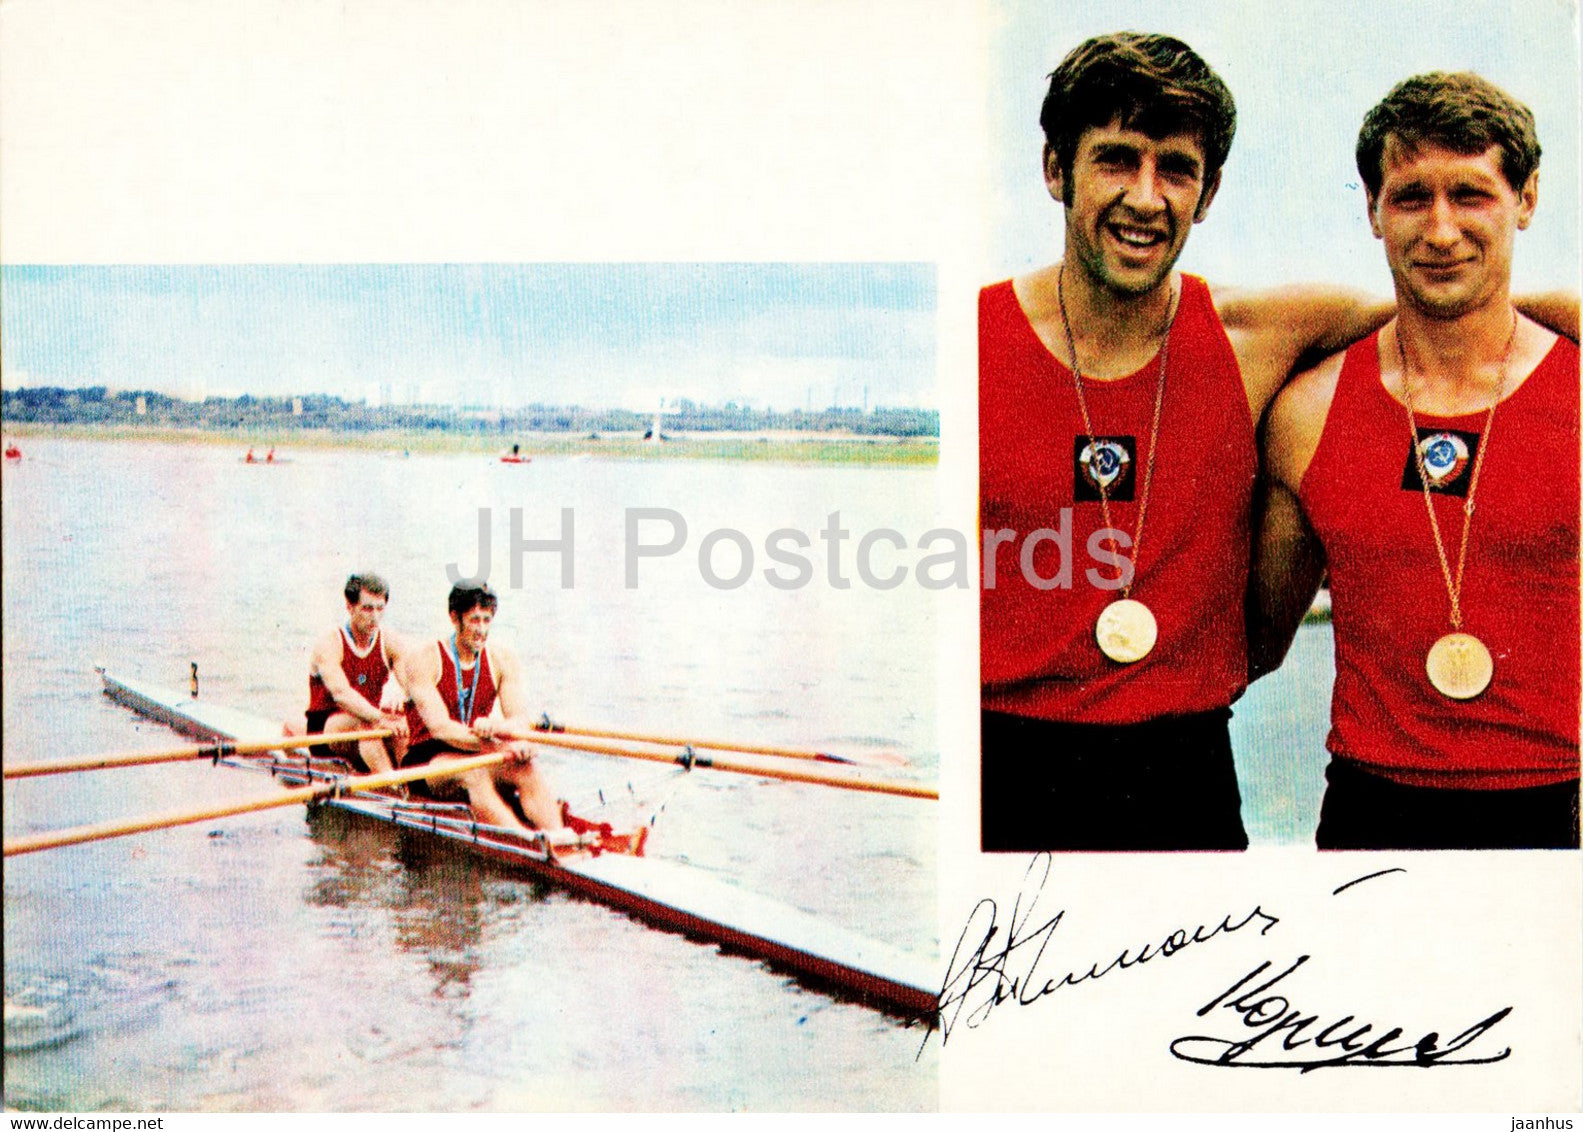 Alexander Timoshinin - Gennady Korshikov - rowing - Soviet champions - sports - 1974 - Russia USSR - unused - JH Postcards